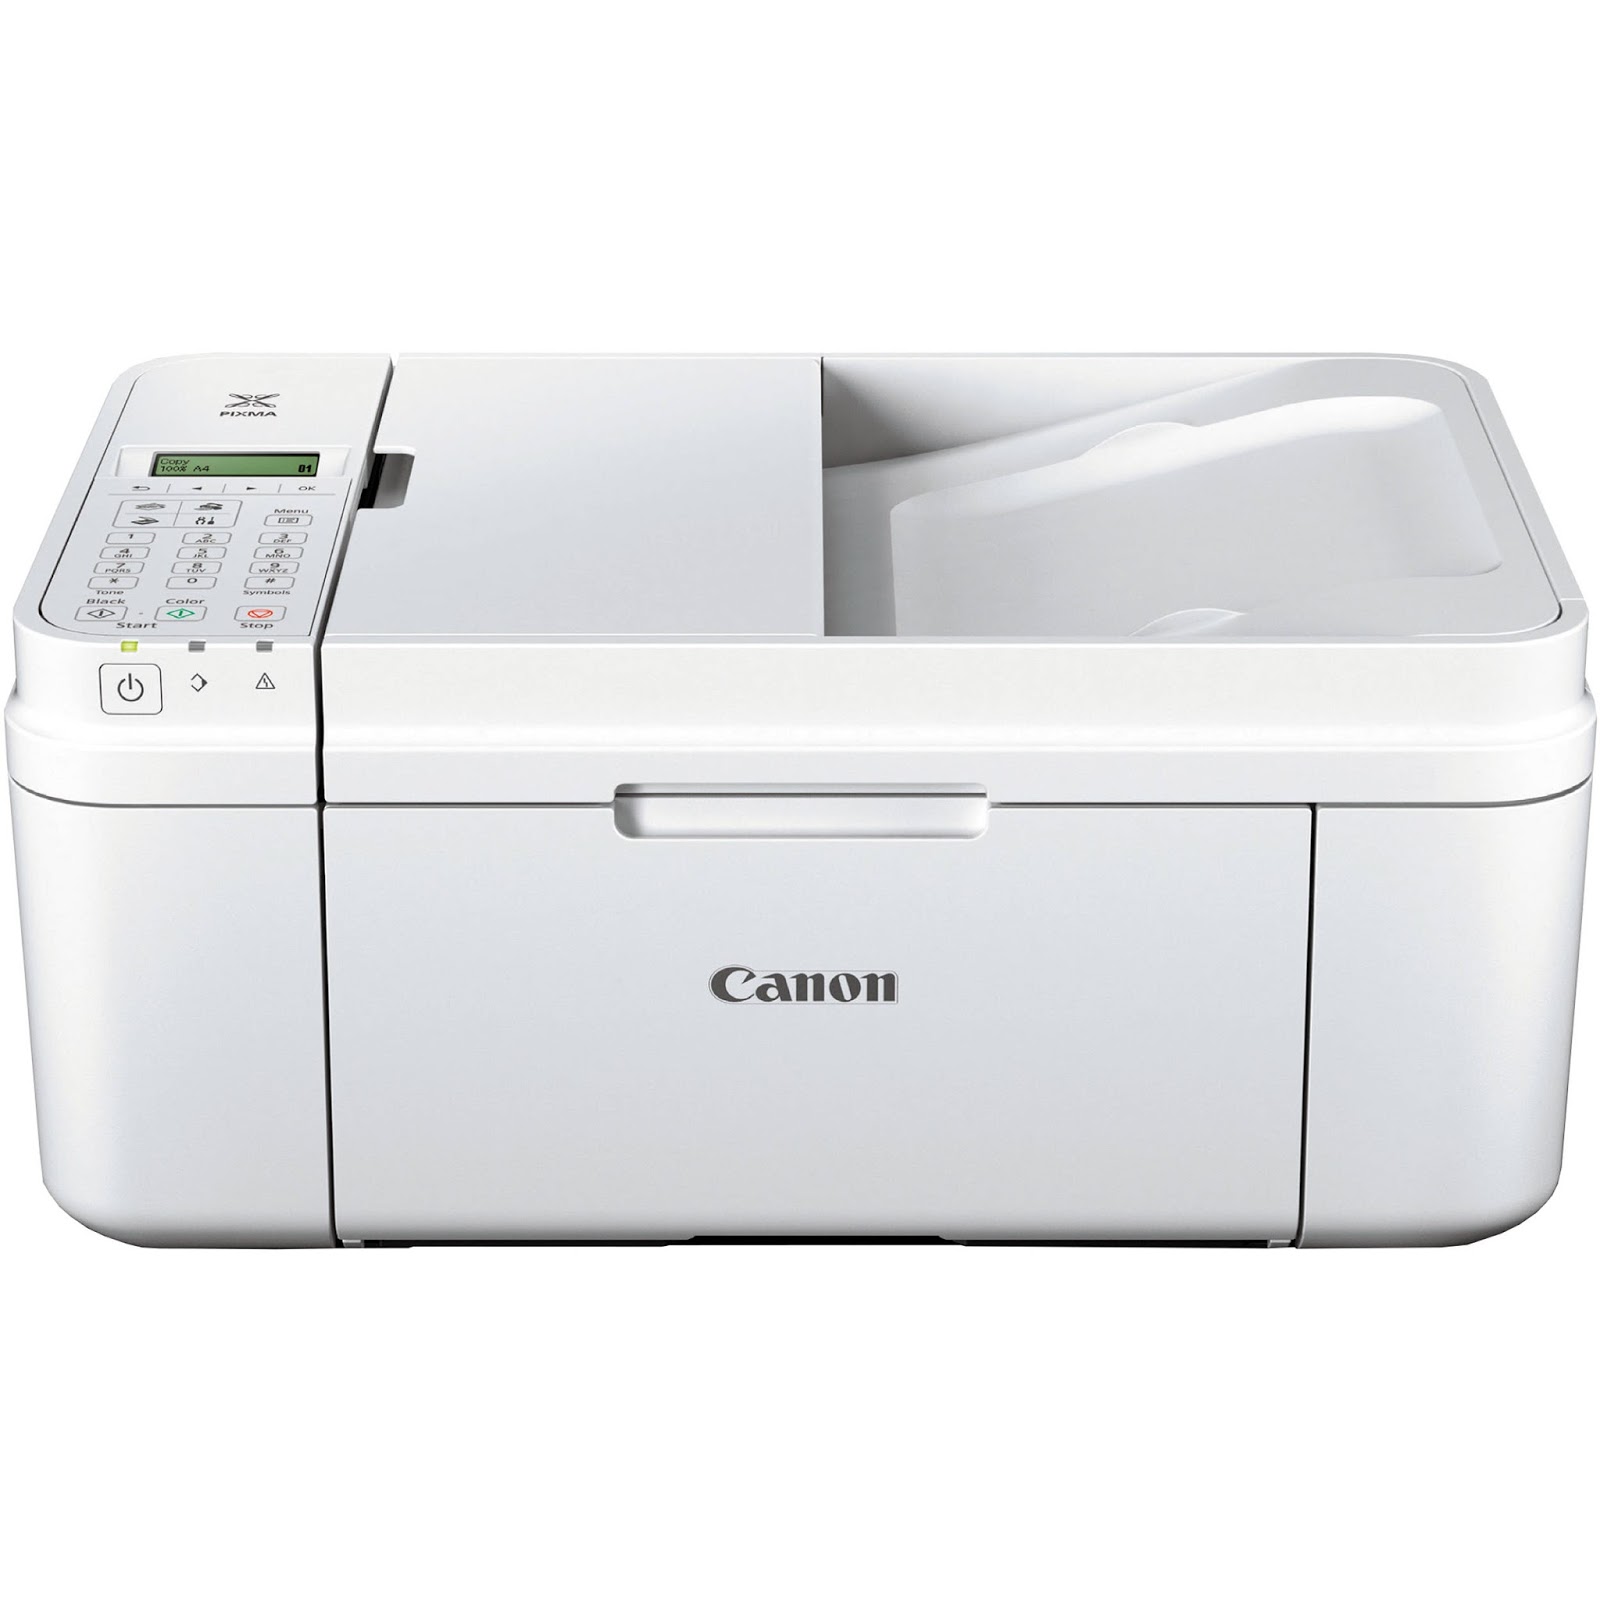 Canon Printer Drivers Free Download Mac - newadvertising